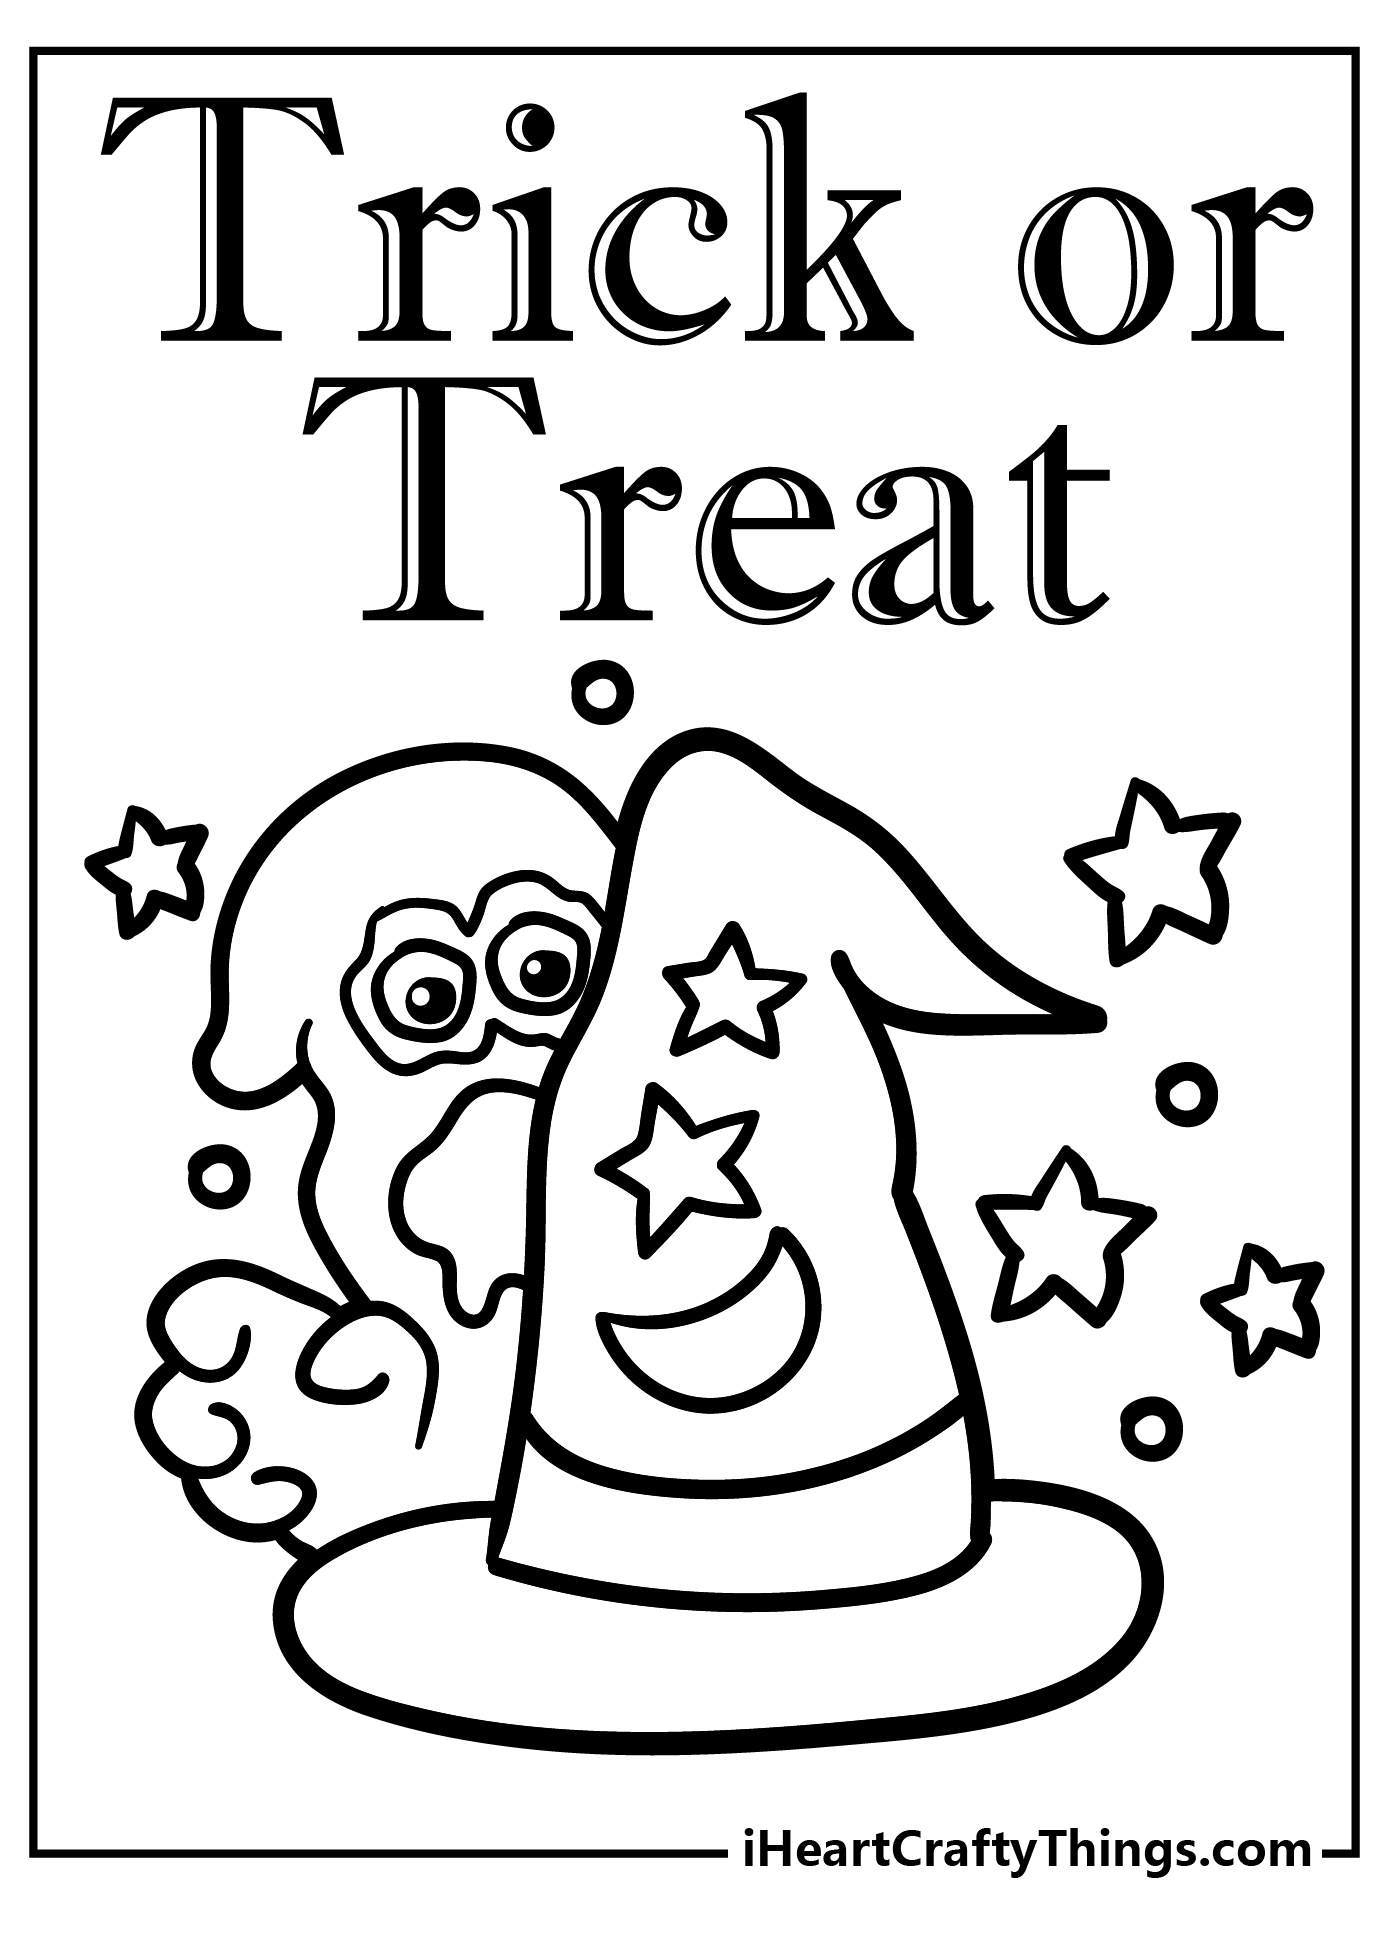 Trick Or Treat Coloring Original Sheet for children free download